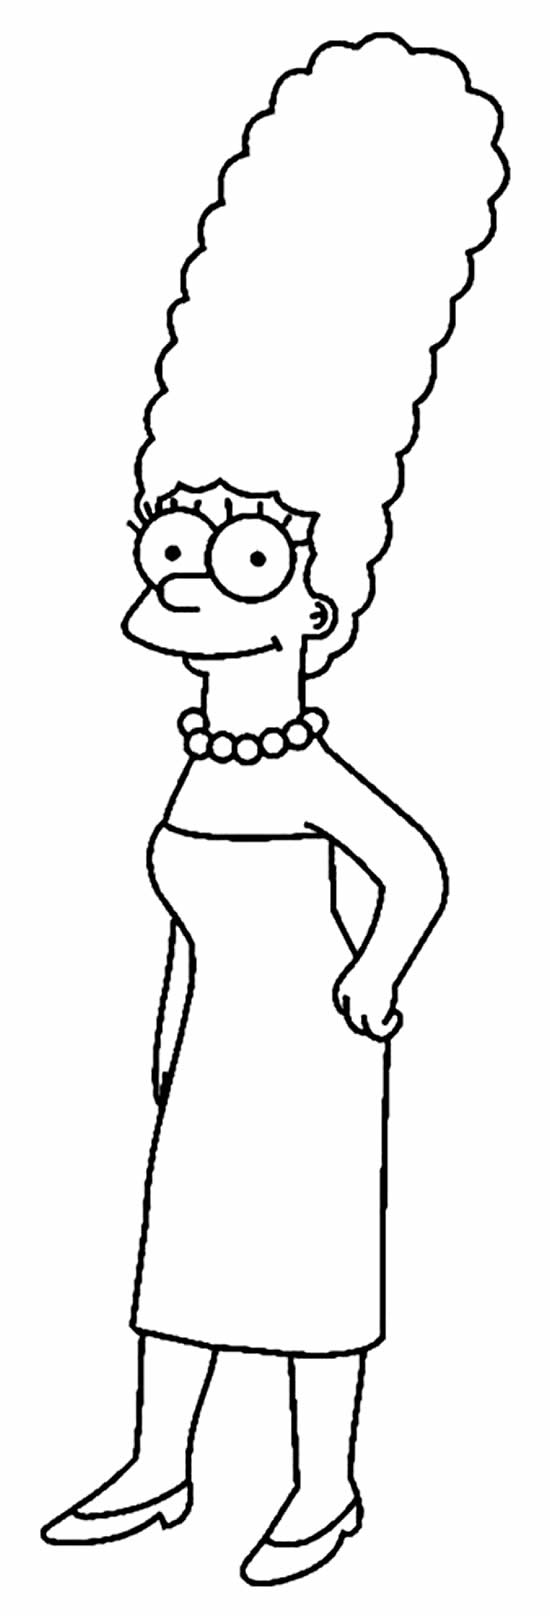 Desenhos dos Simpsons para colorir